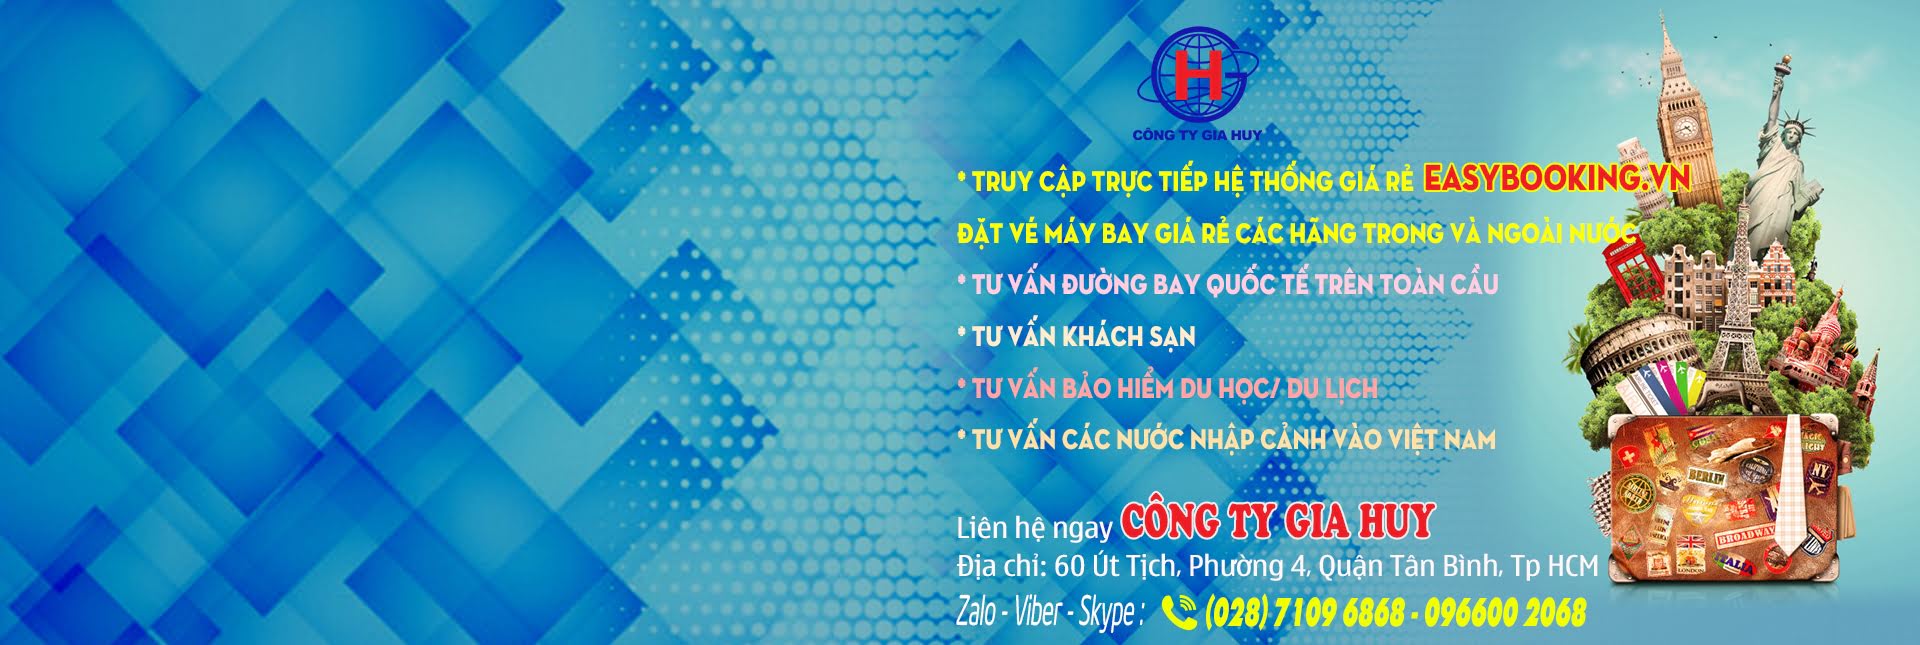 39k khoi hanh tu sai gon - ve may bay vietnam airlines - easybookinh.vn